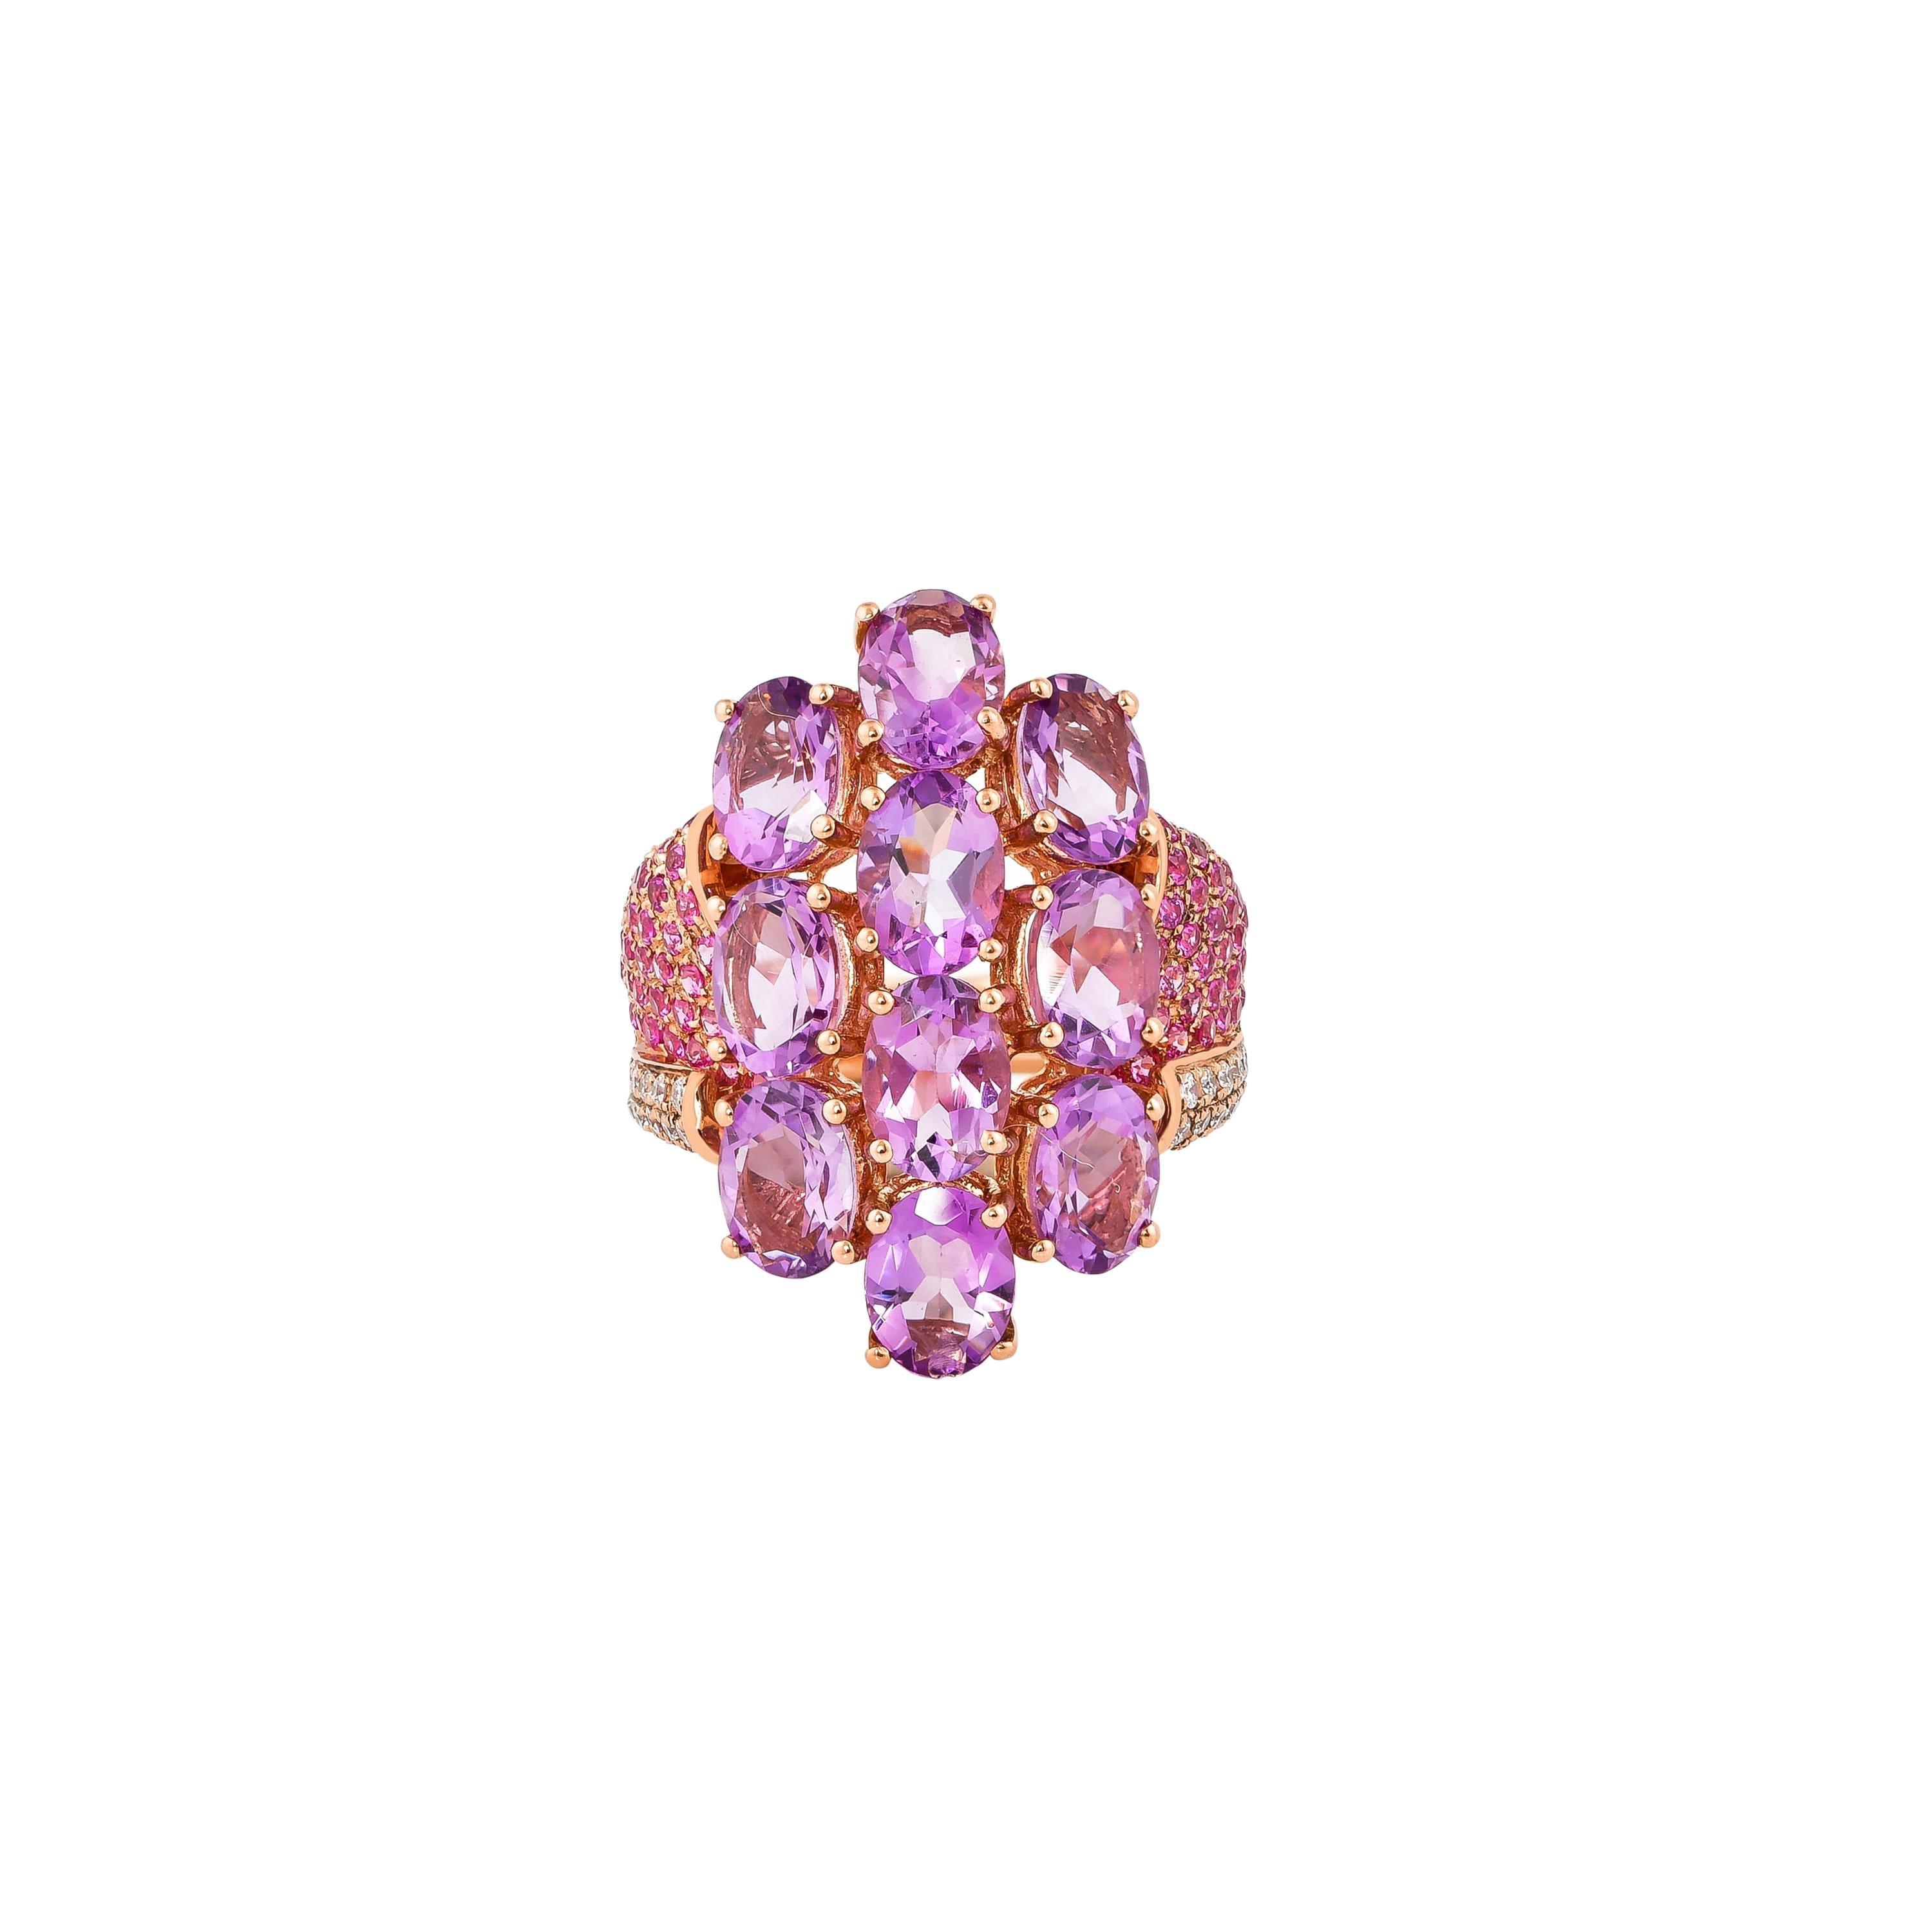 Mixed Cut 6.5 Carat Amethyst, Pink Sapphire and Diamond Ring in 14 Karat Rose Gold